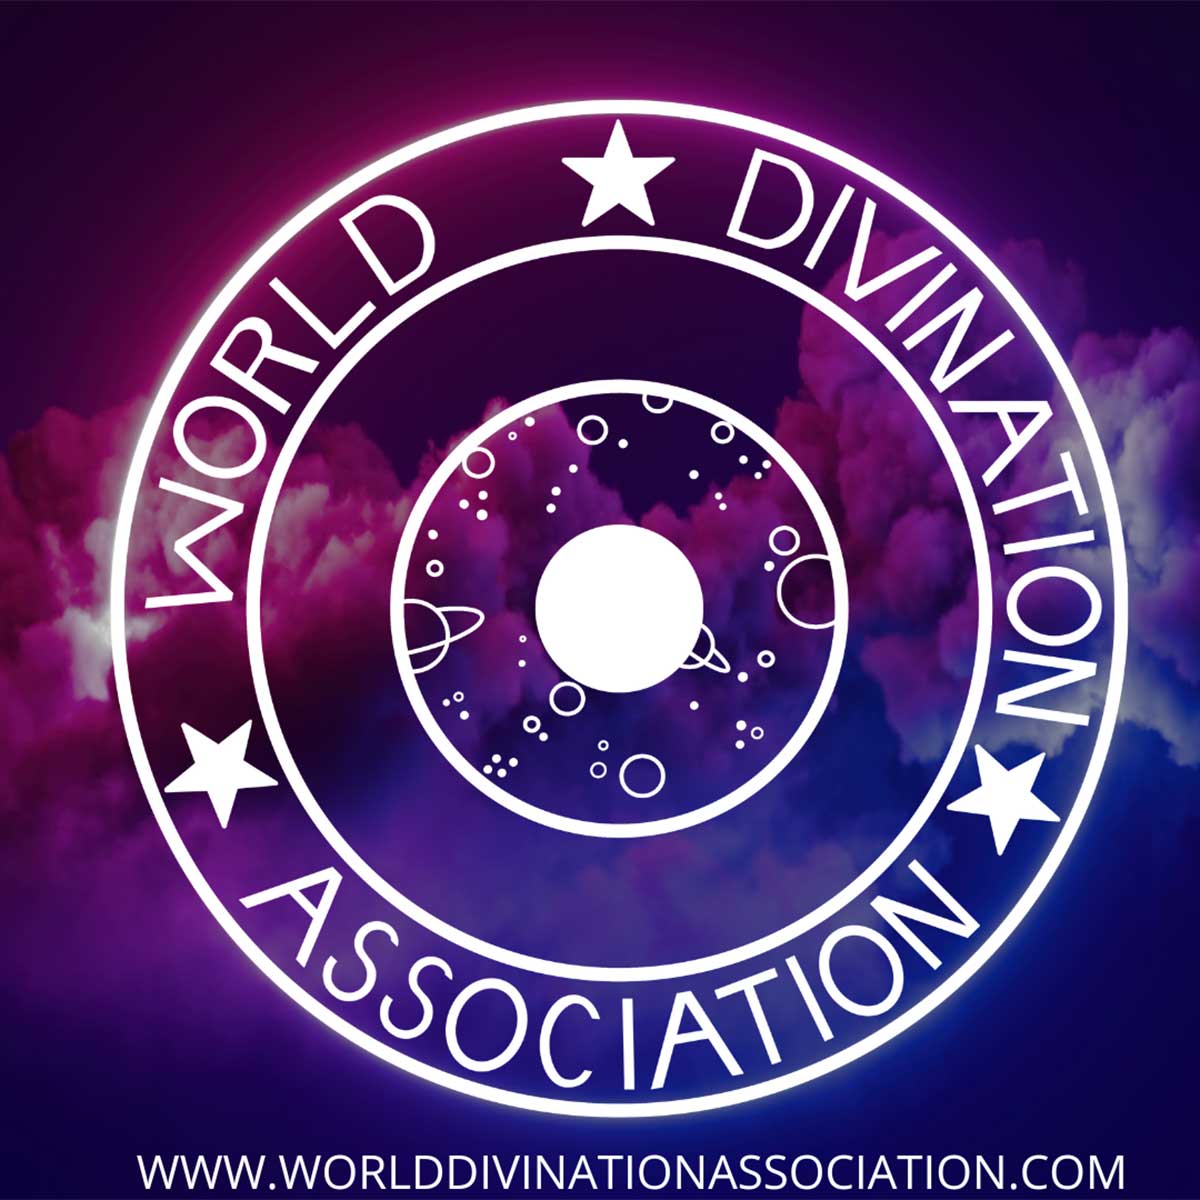 World Divination Association logo.